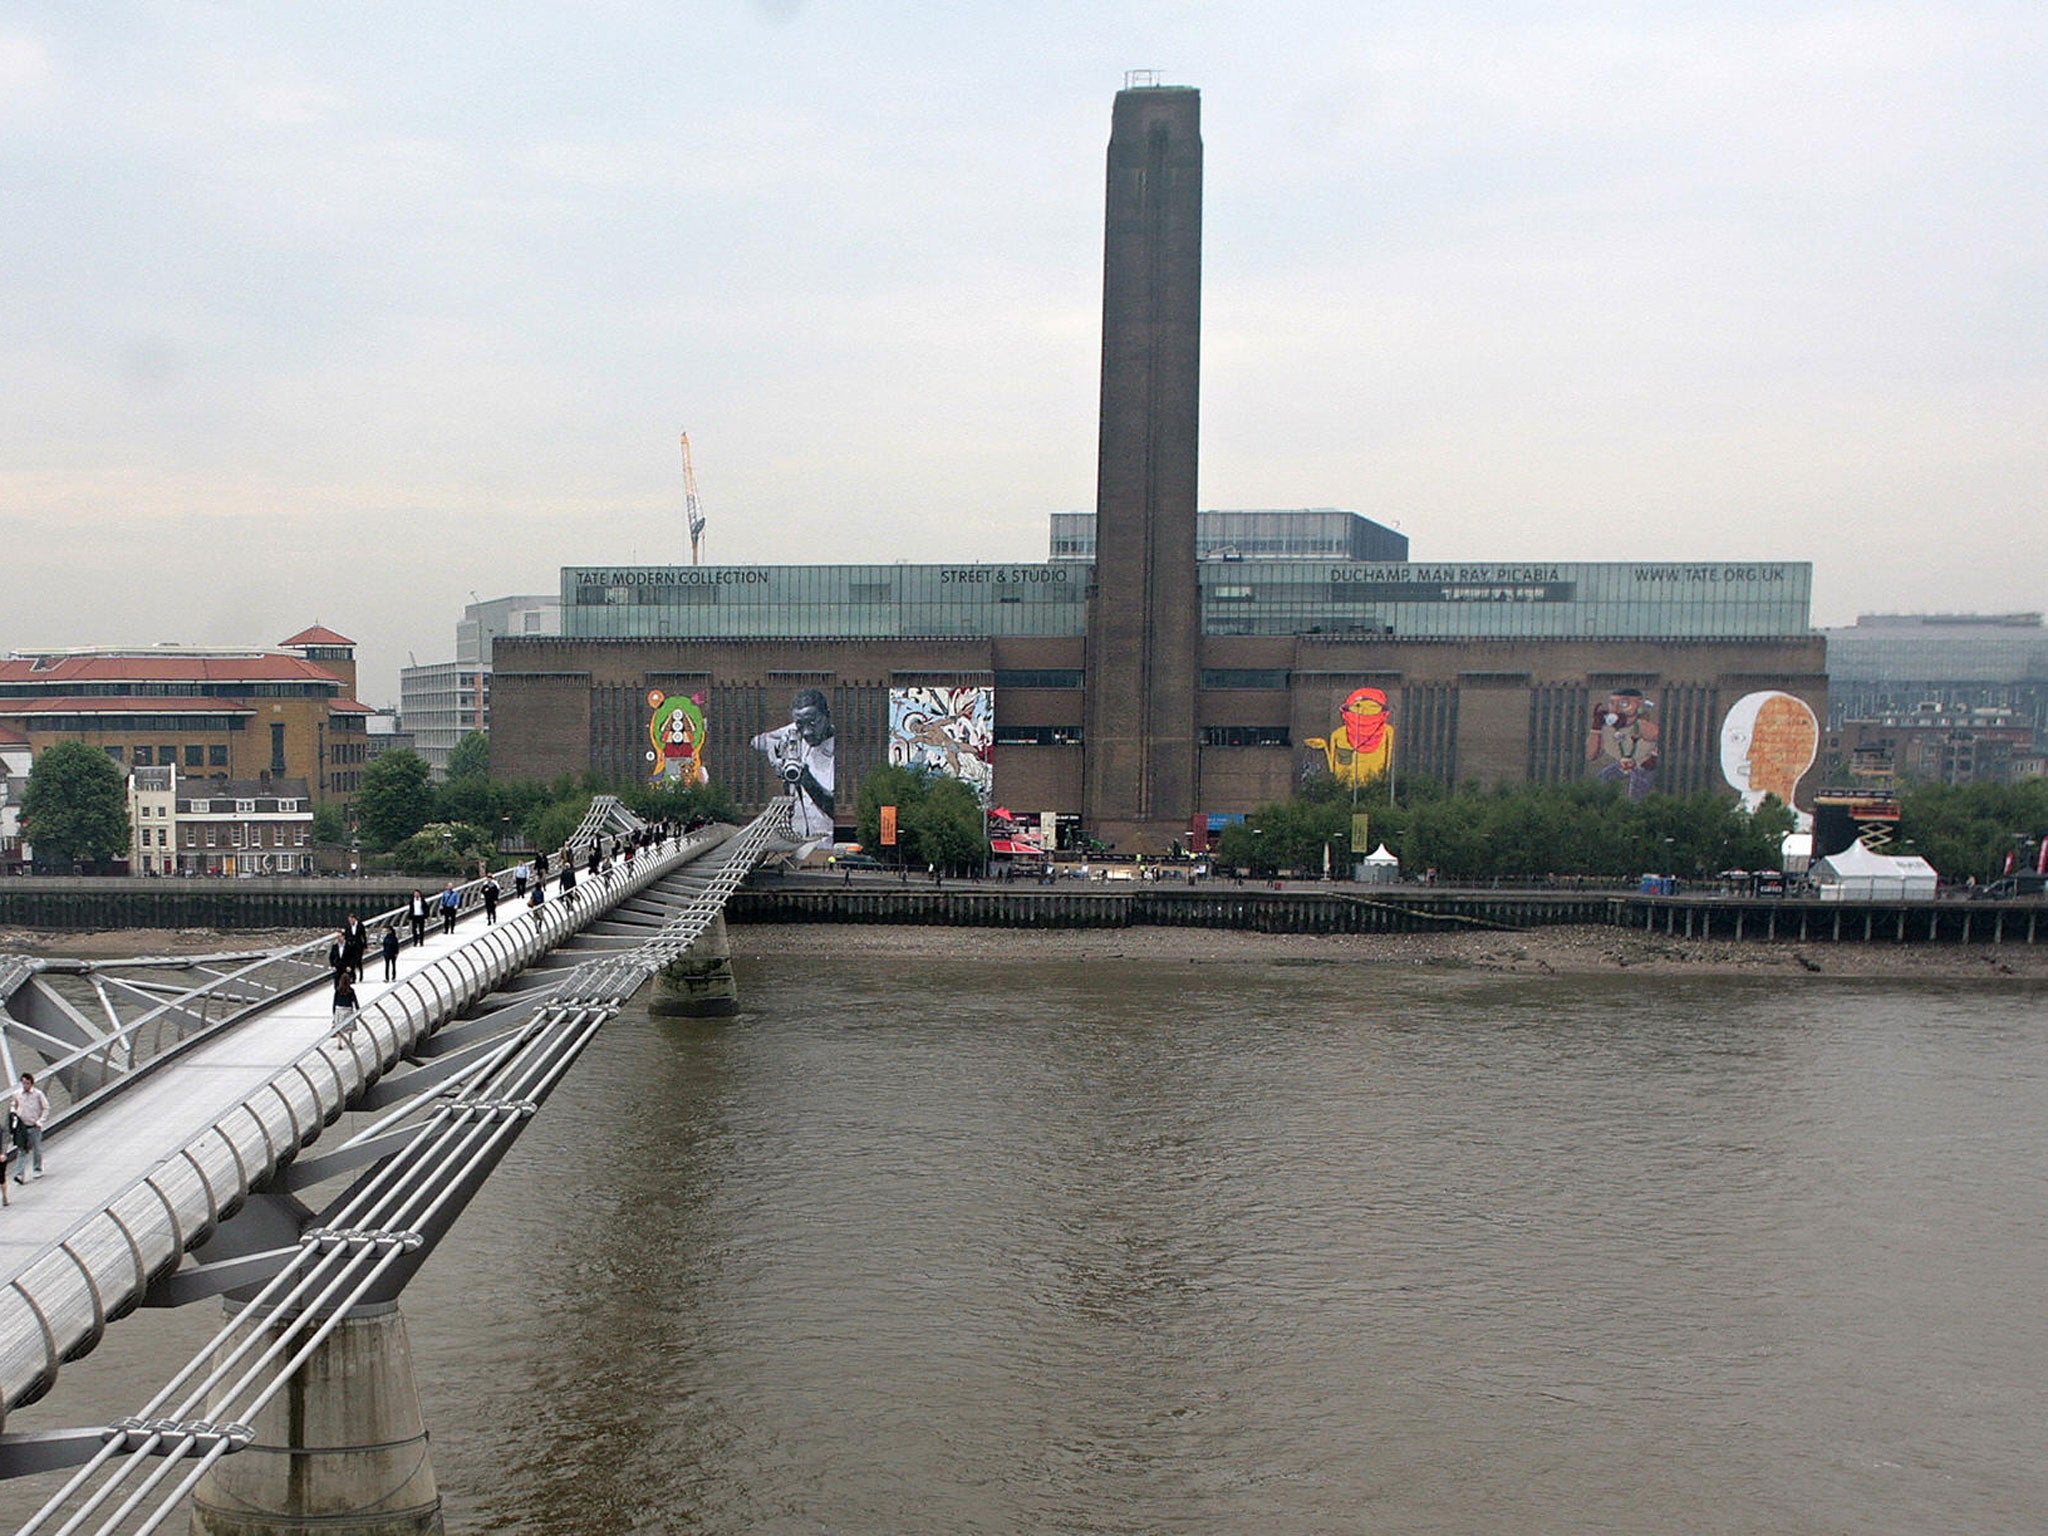 The Tate Modern in London